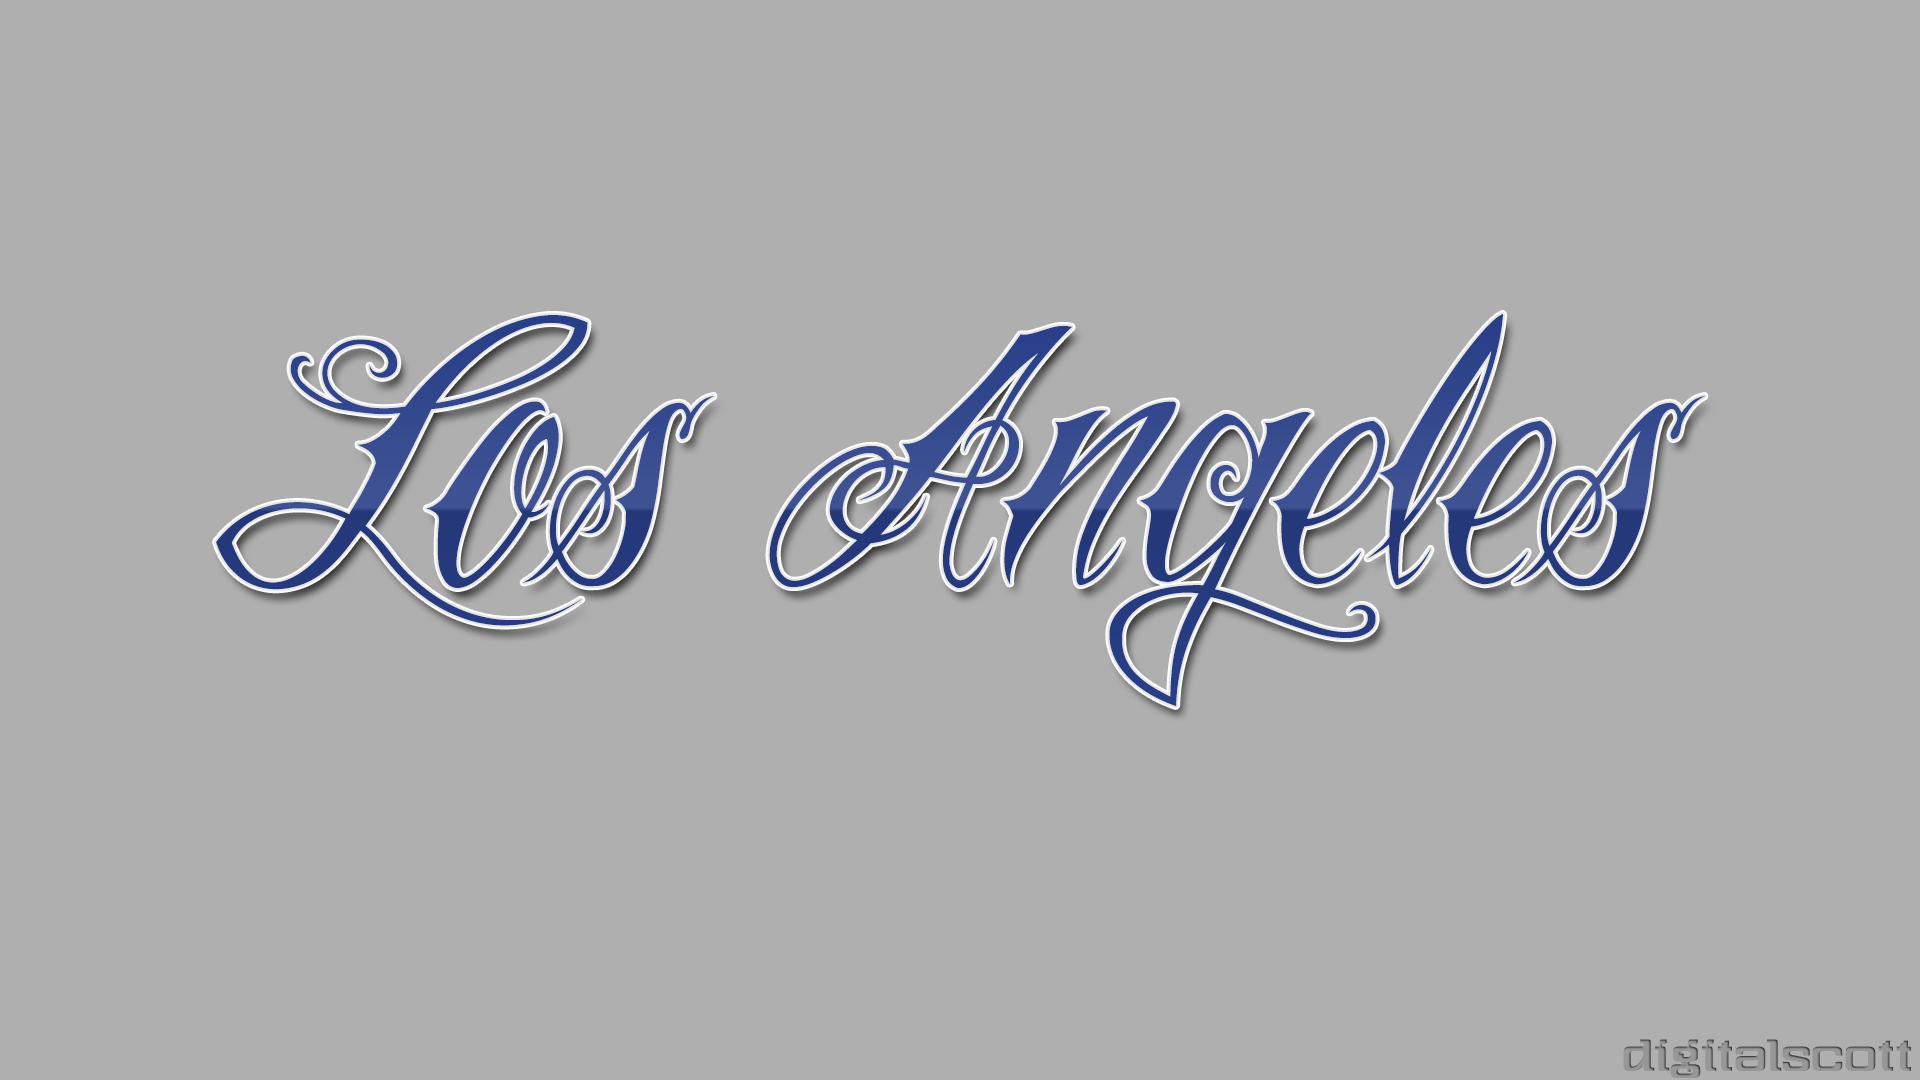 Los Angeles Dodgers Wallpaper. Download